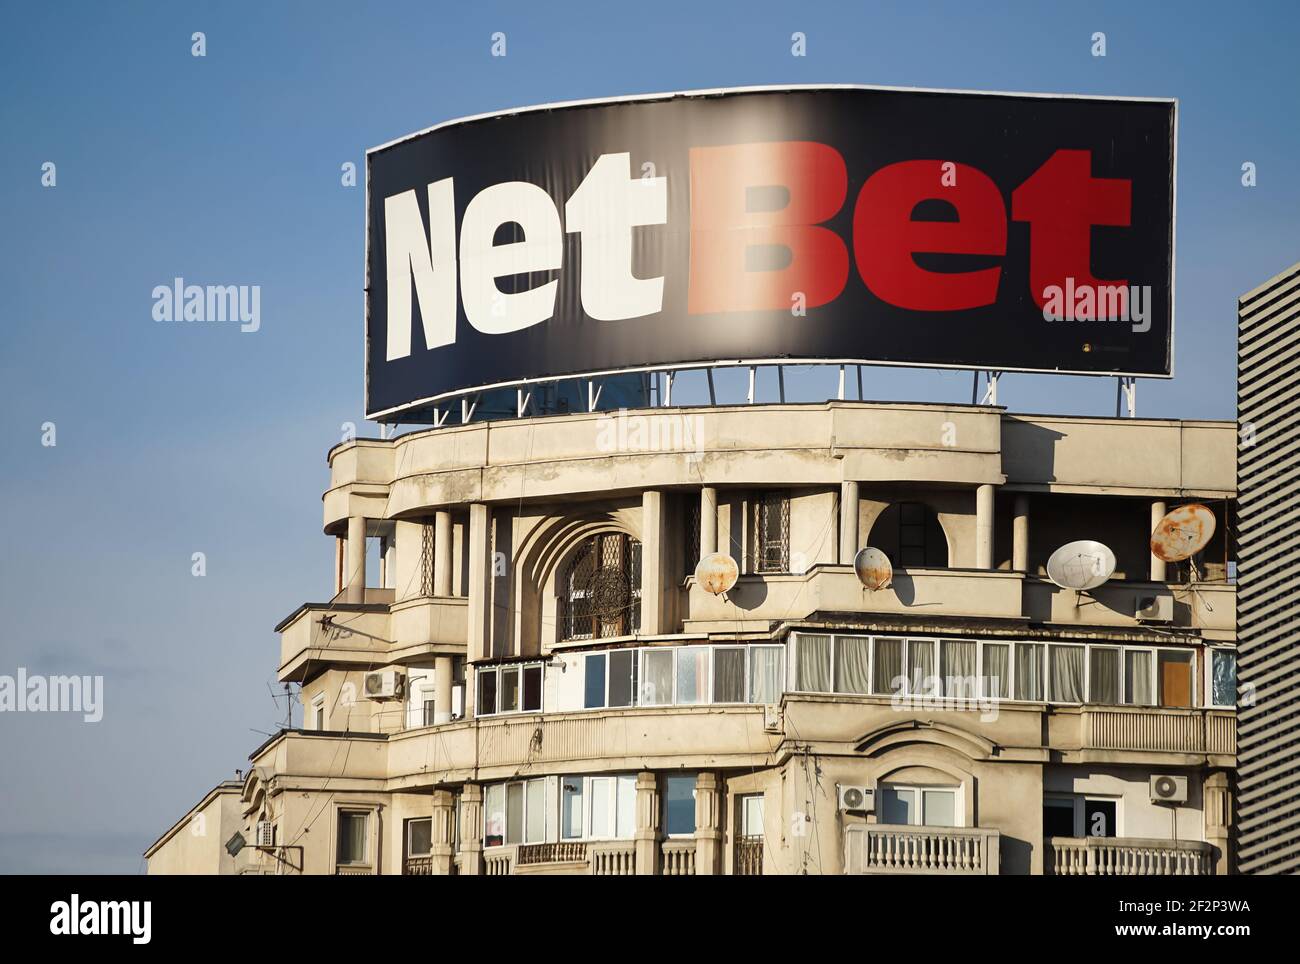 Bucharest, Romania - January 25, 2021: A great NetBet advertisement of the gambling operator NetBet Enterprises Ltd, is seen above a block of flats in Stock Photo